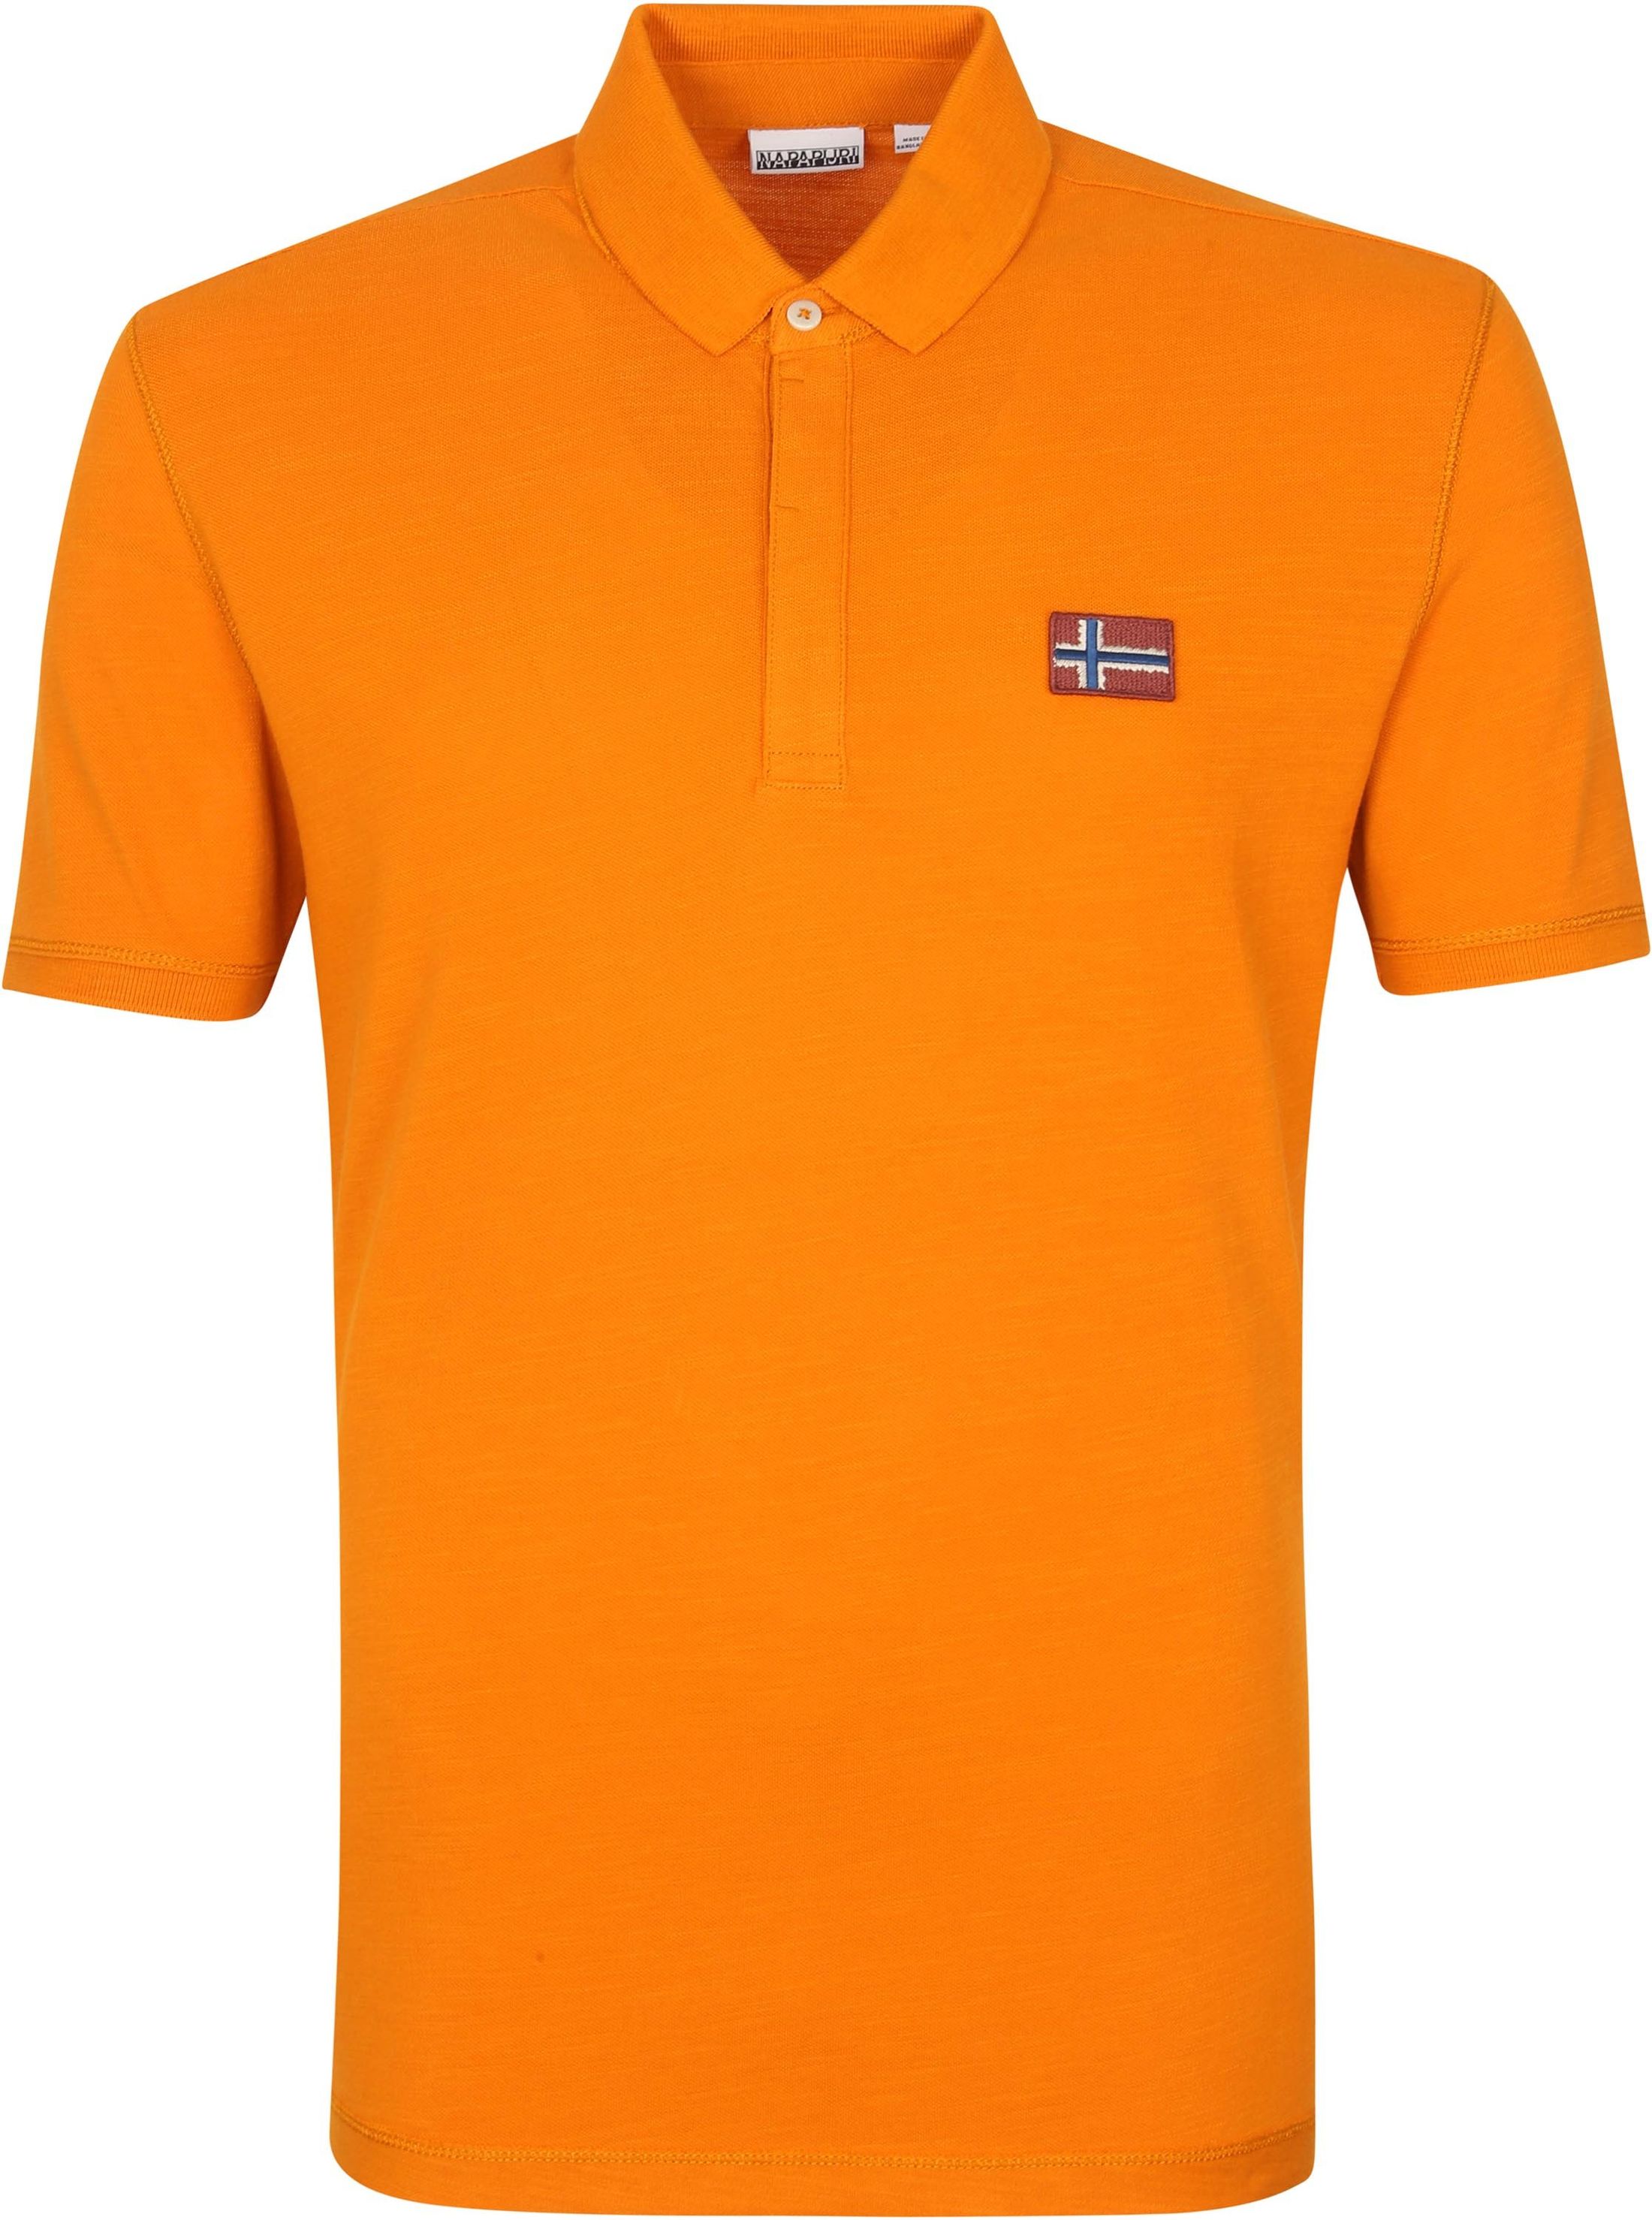 Napapijri Polo Shirt Ebea Orange size L